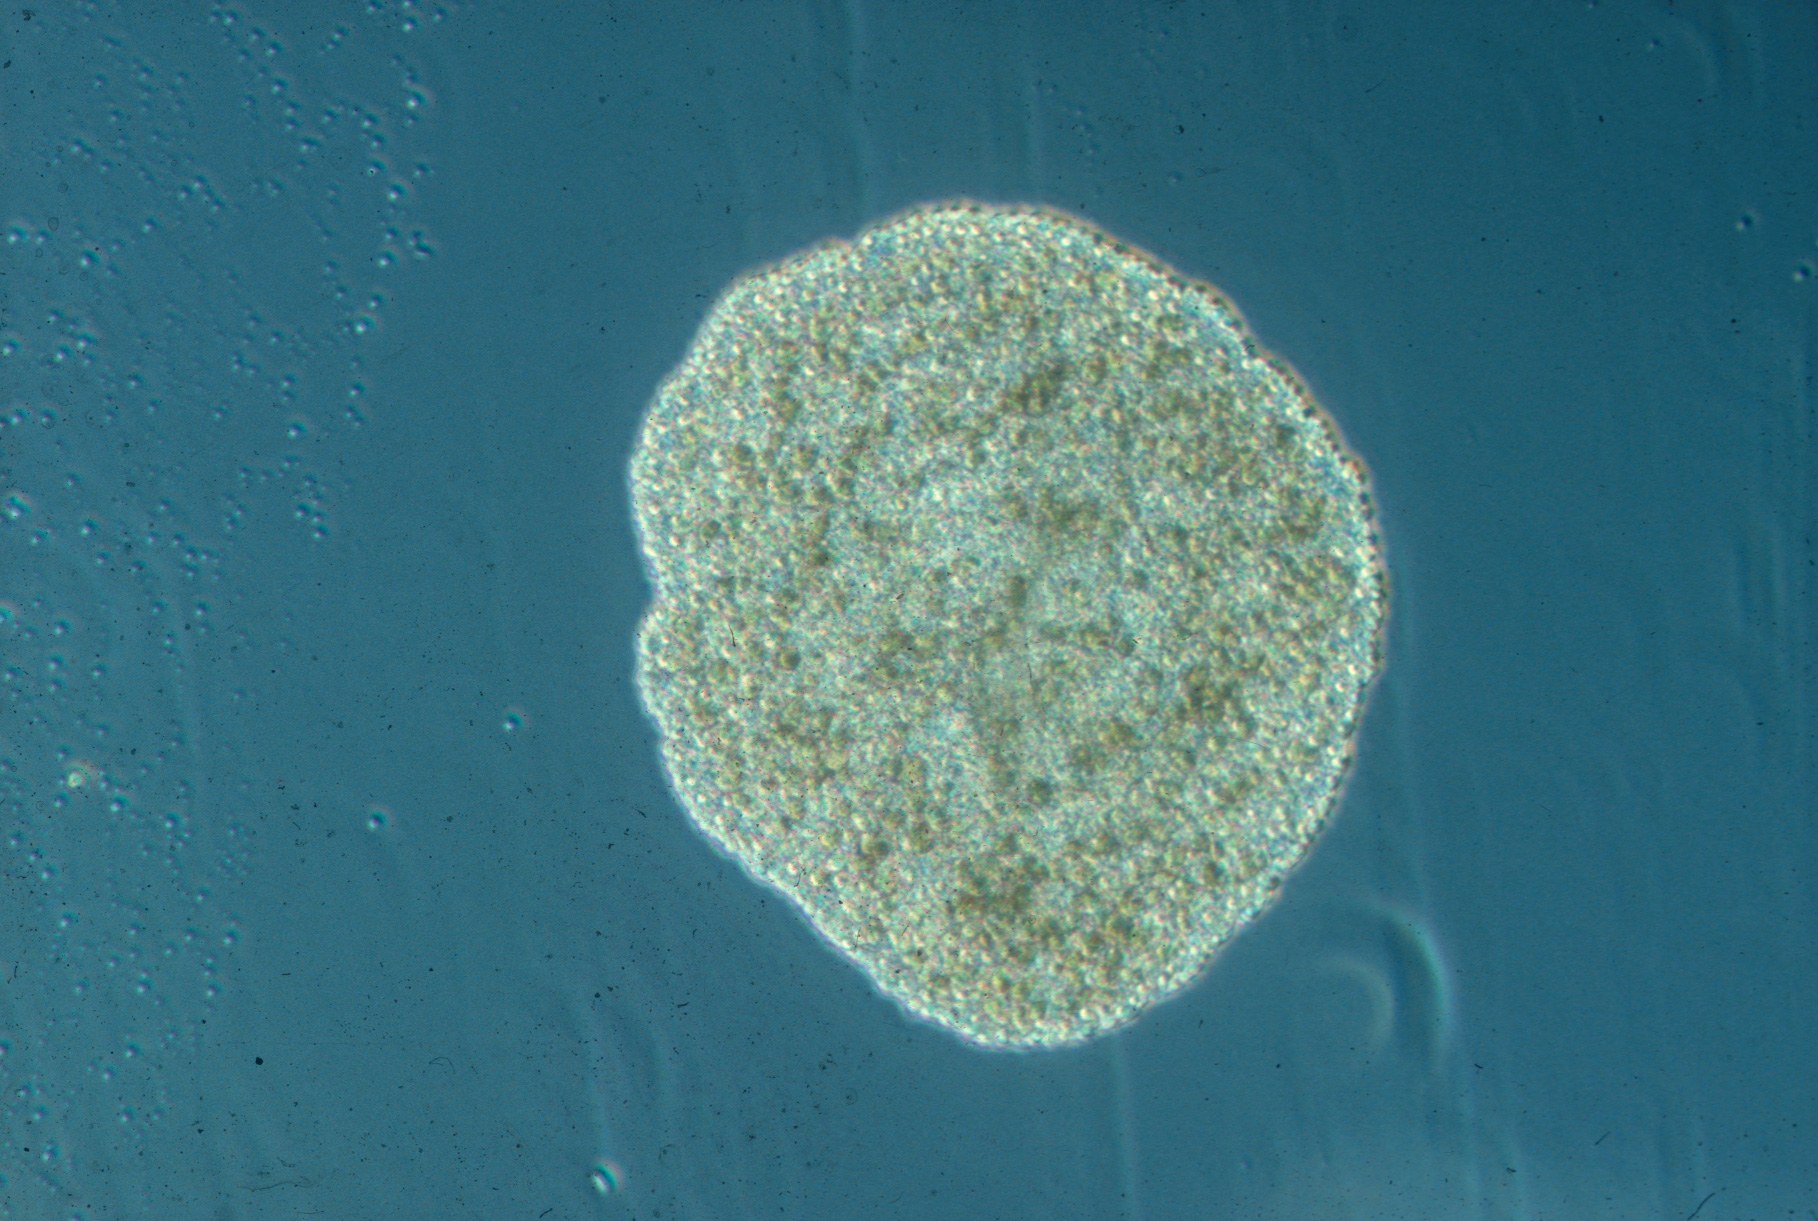 Placozoa on its journey into microgravity